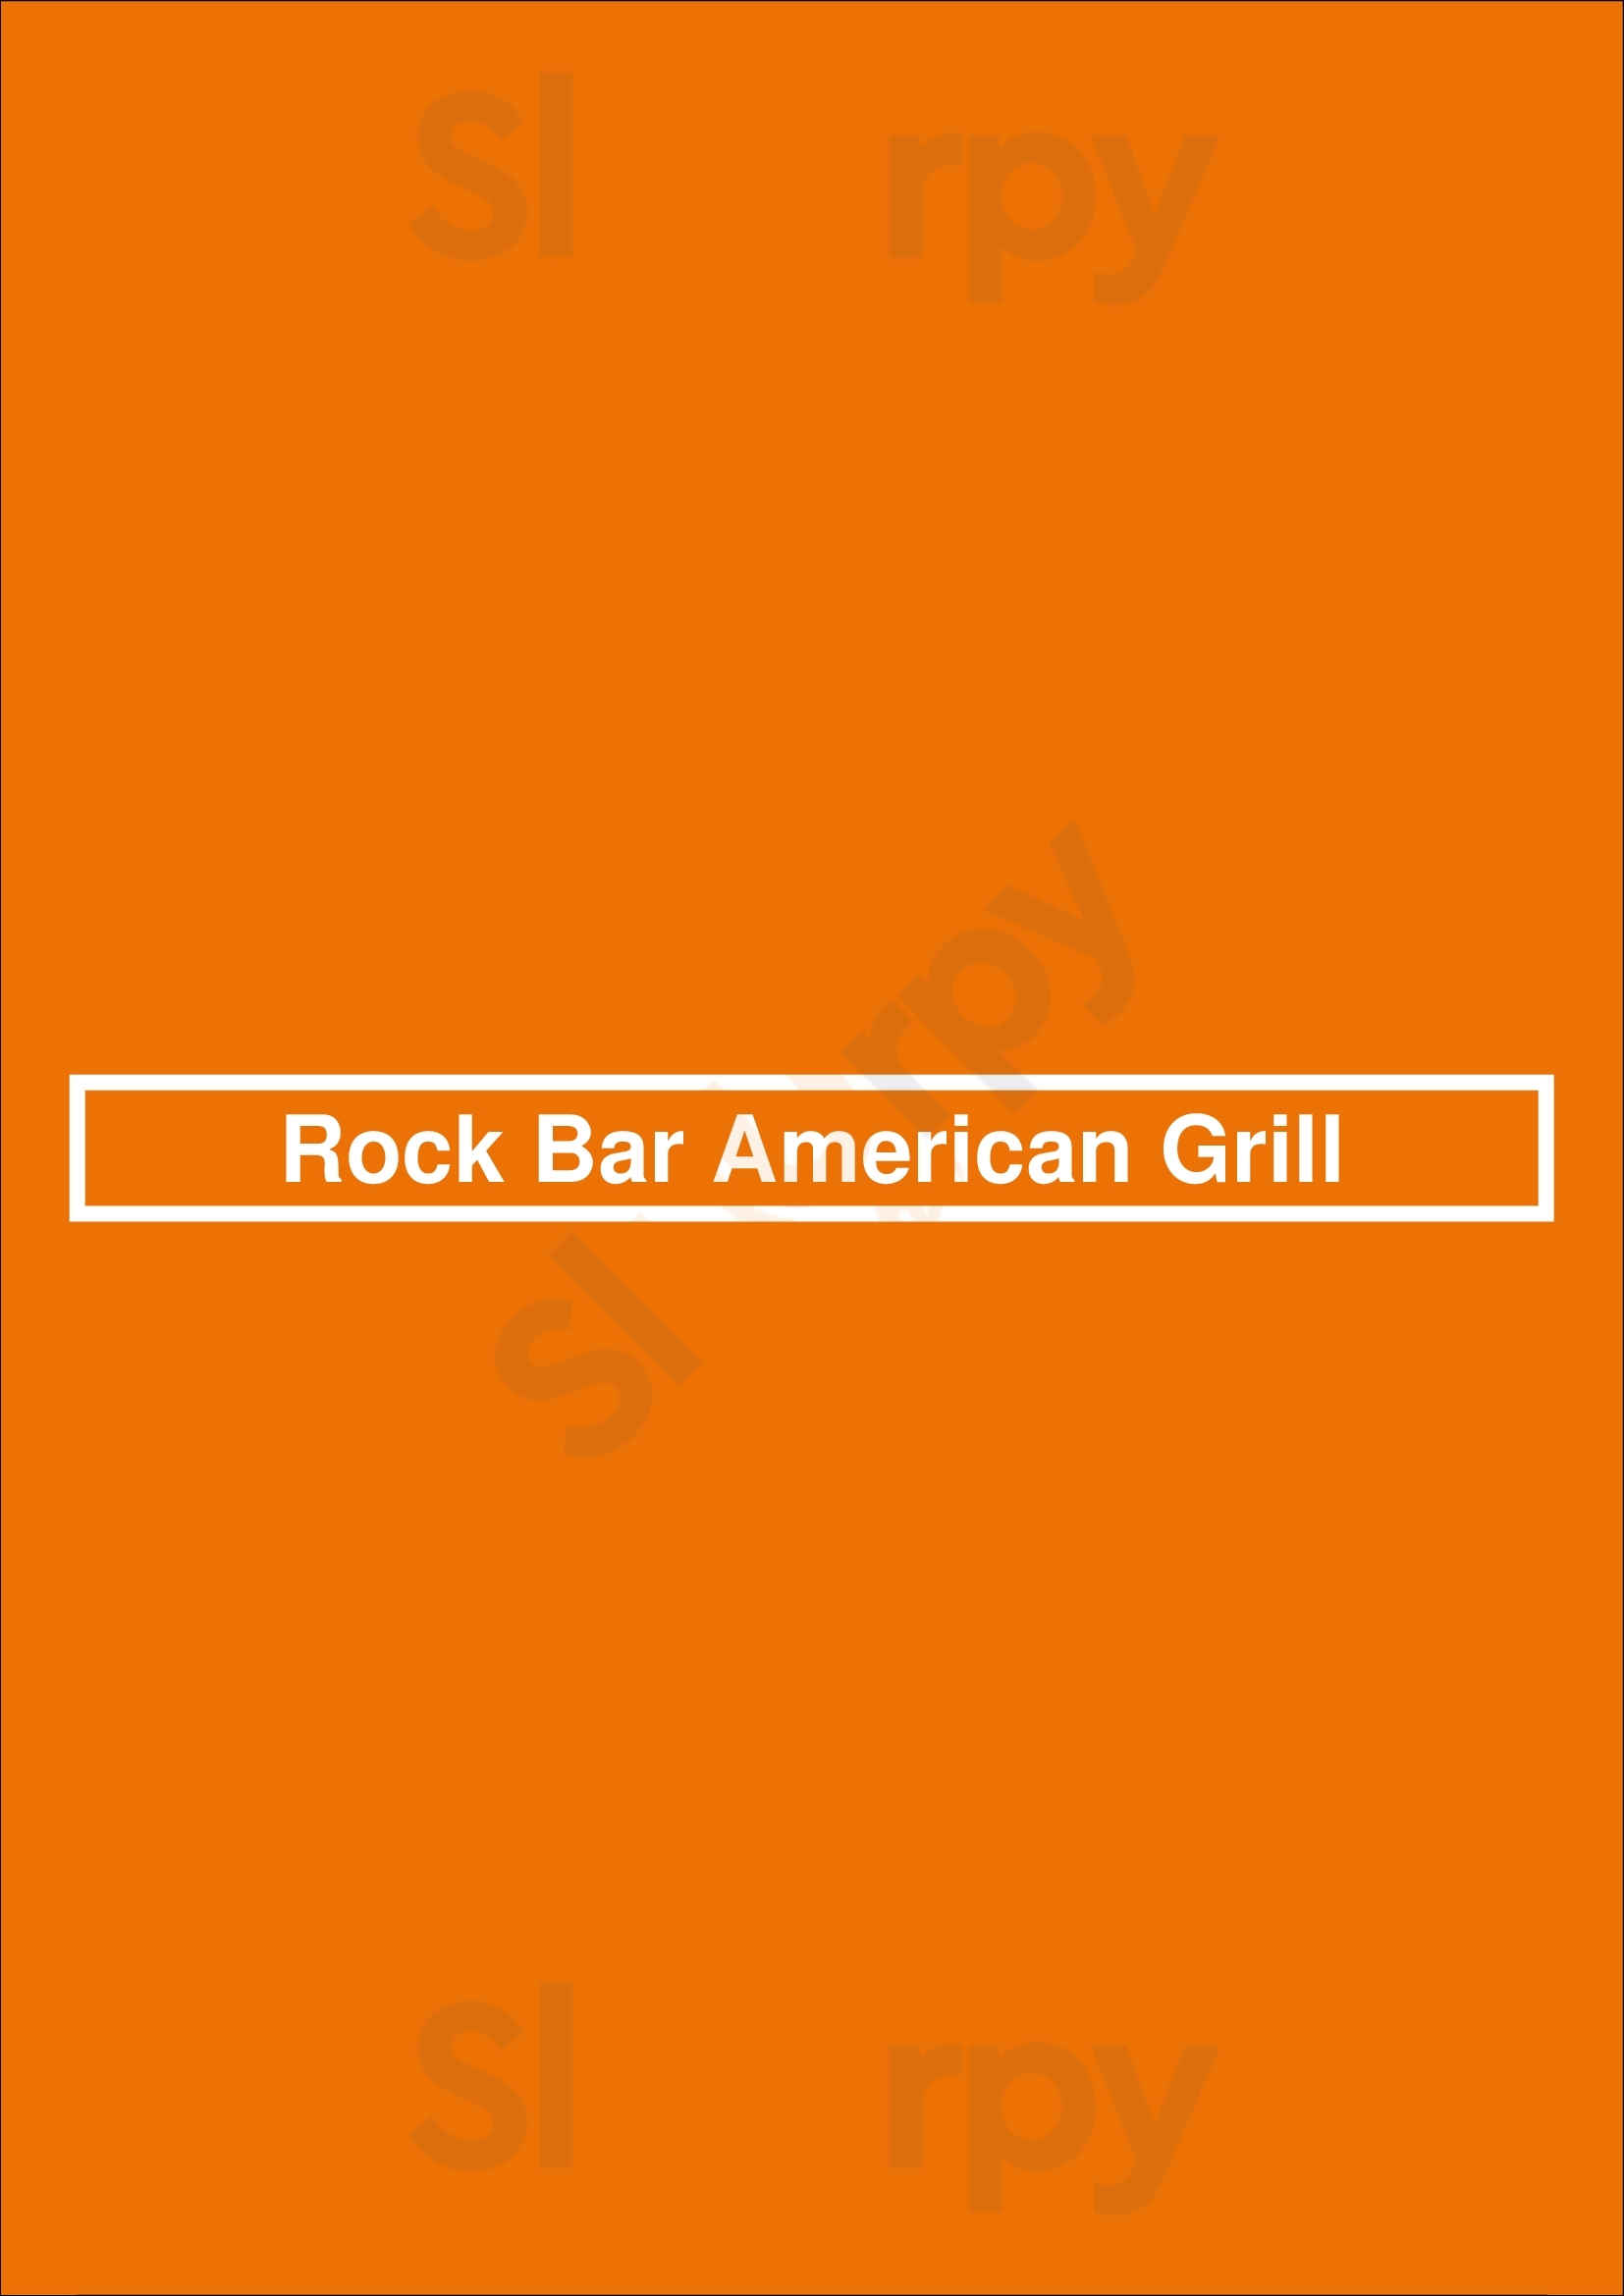 Rock Bar American Grill Cedar Rapids Menu - 1